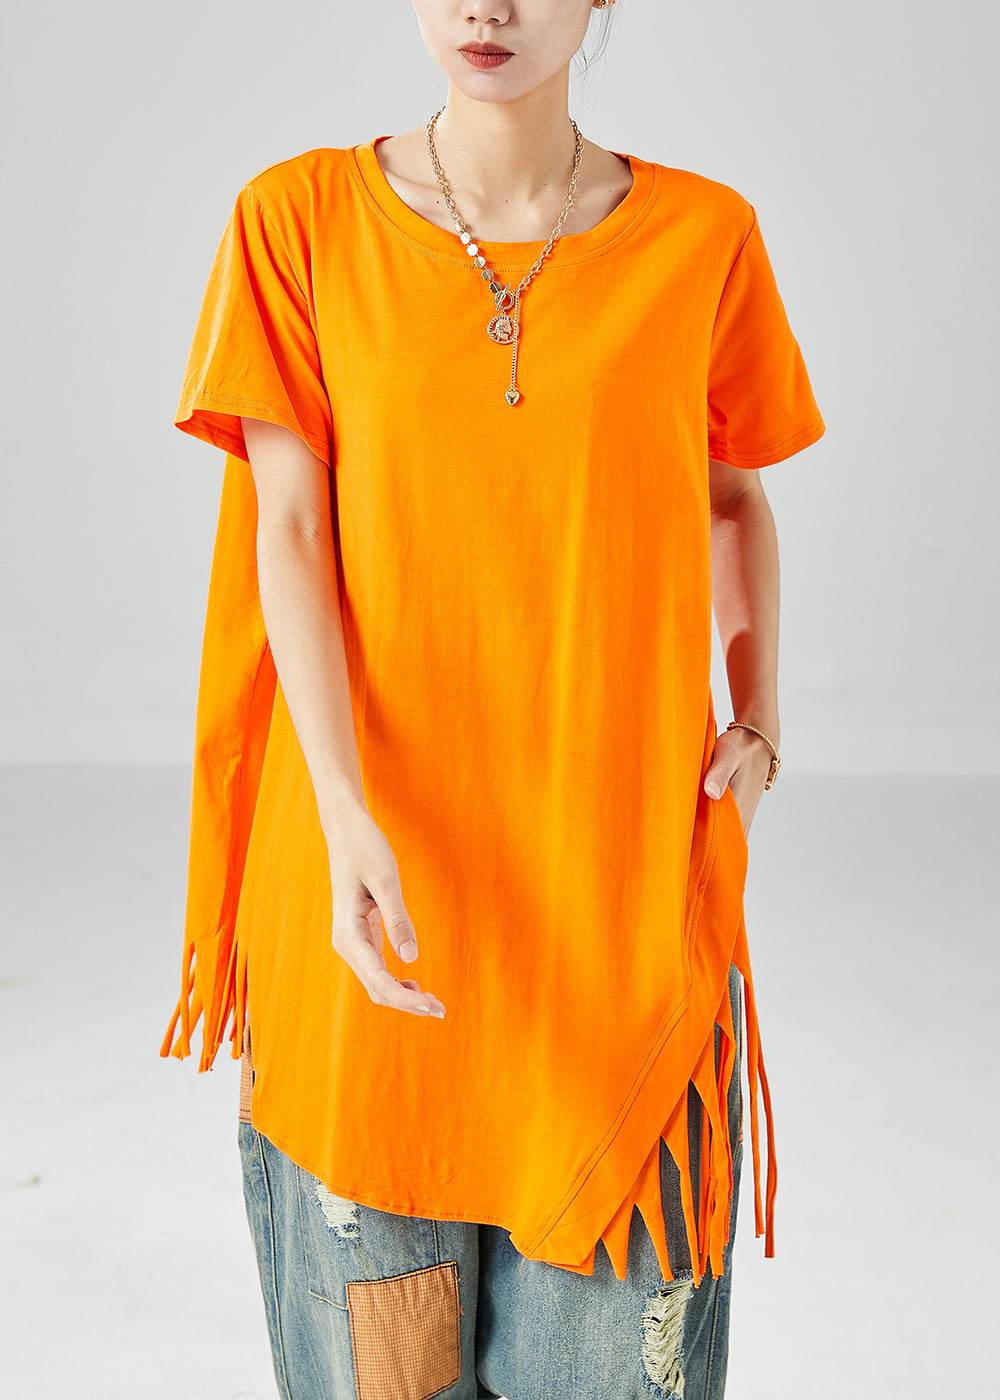 Art Orange Asymmetrical Tassel Cotton Tank Tops Summer LY6073 - fabuloryshop